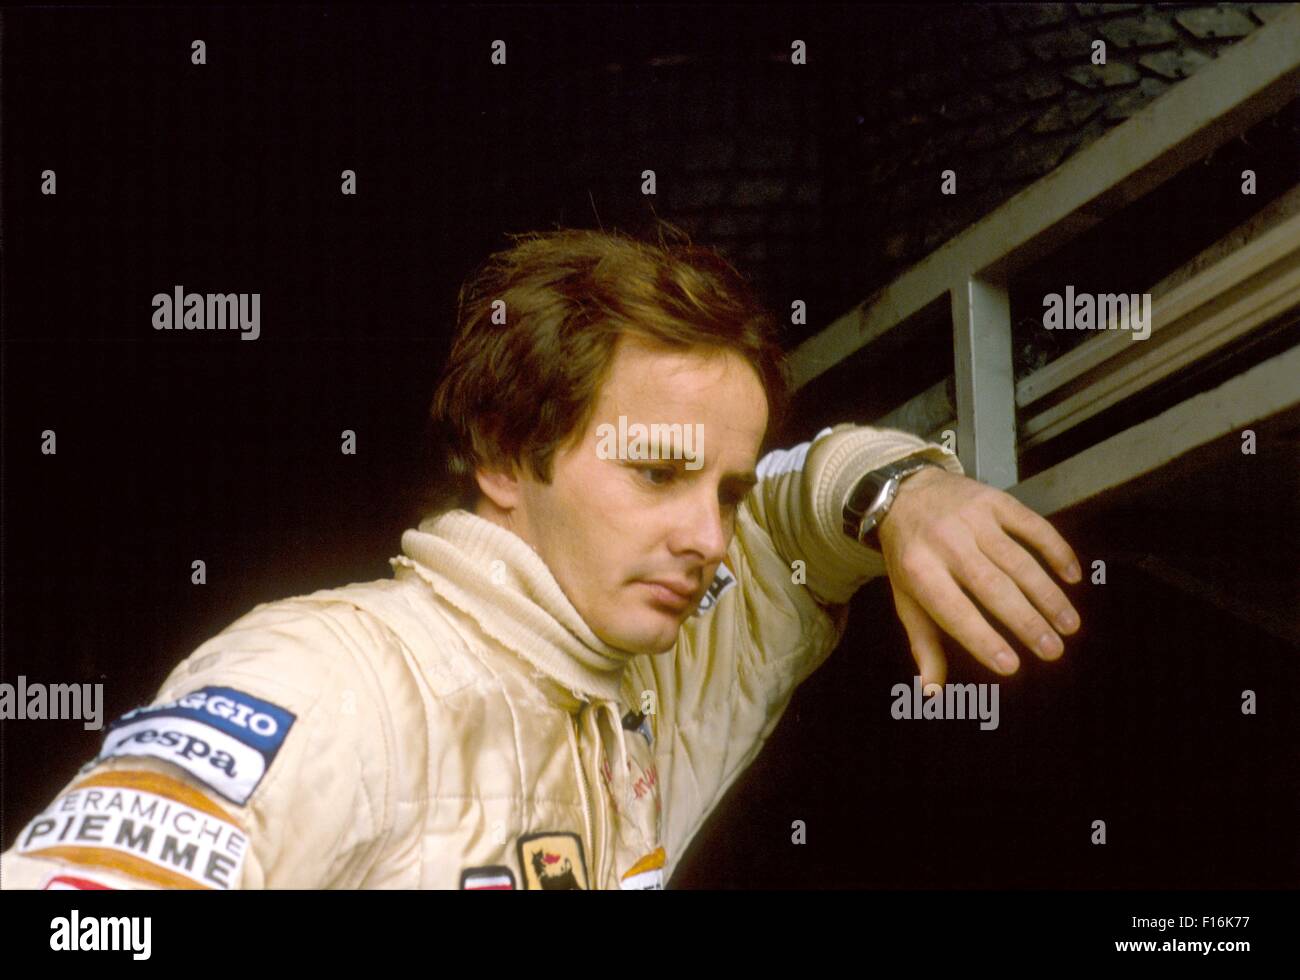 Gilles villeneuve 1981 hi-res stock photography and images - Alamy